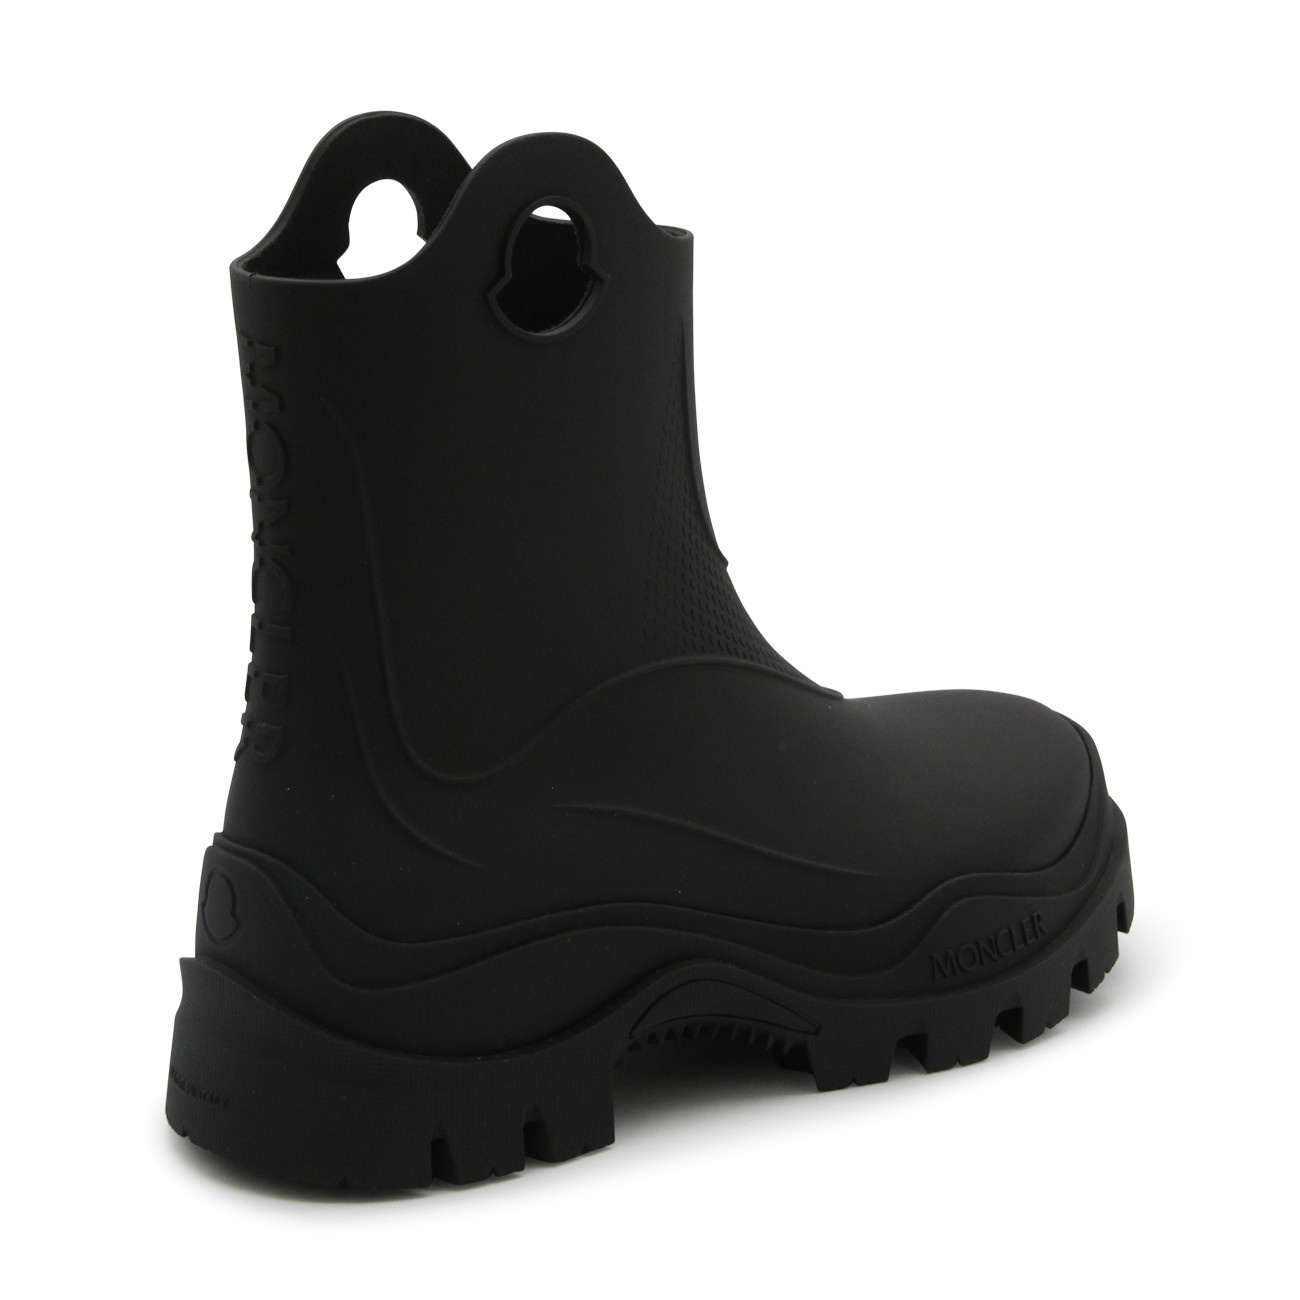 black rainy boots - 3